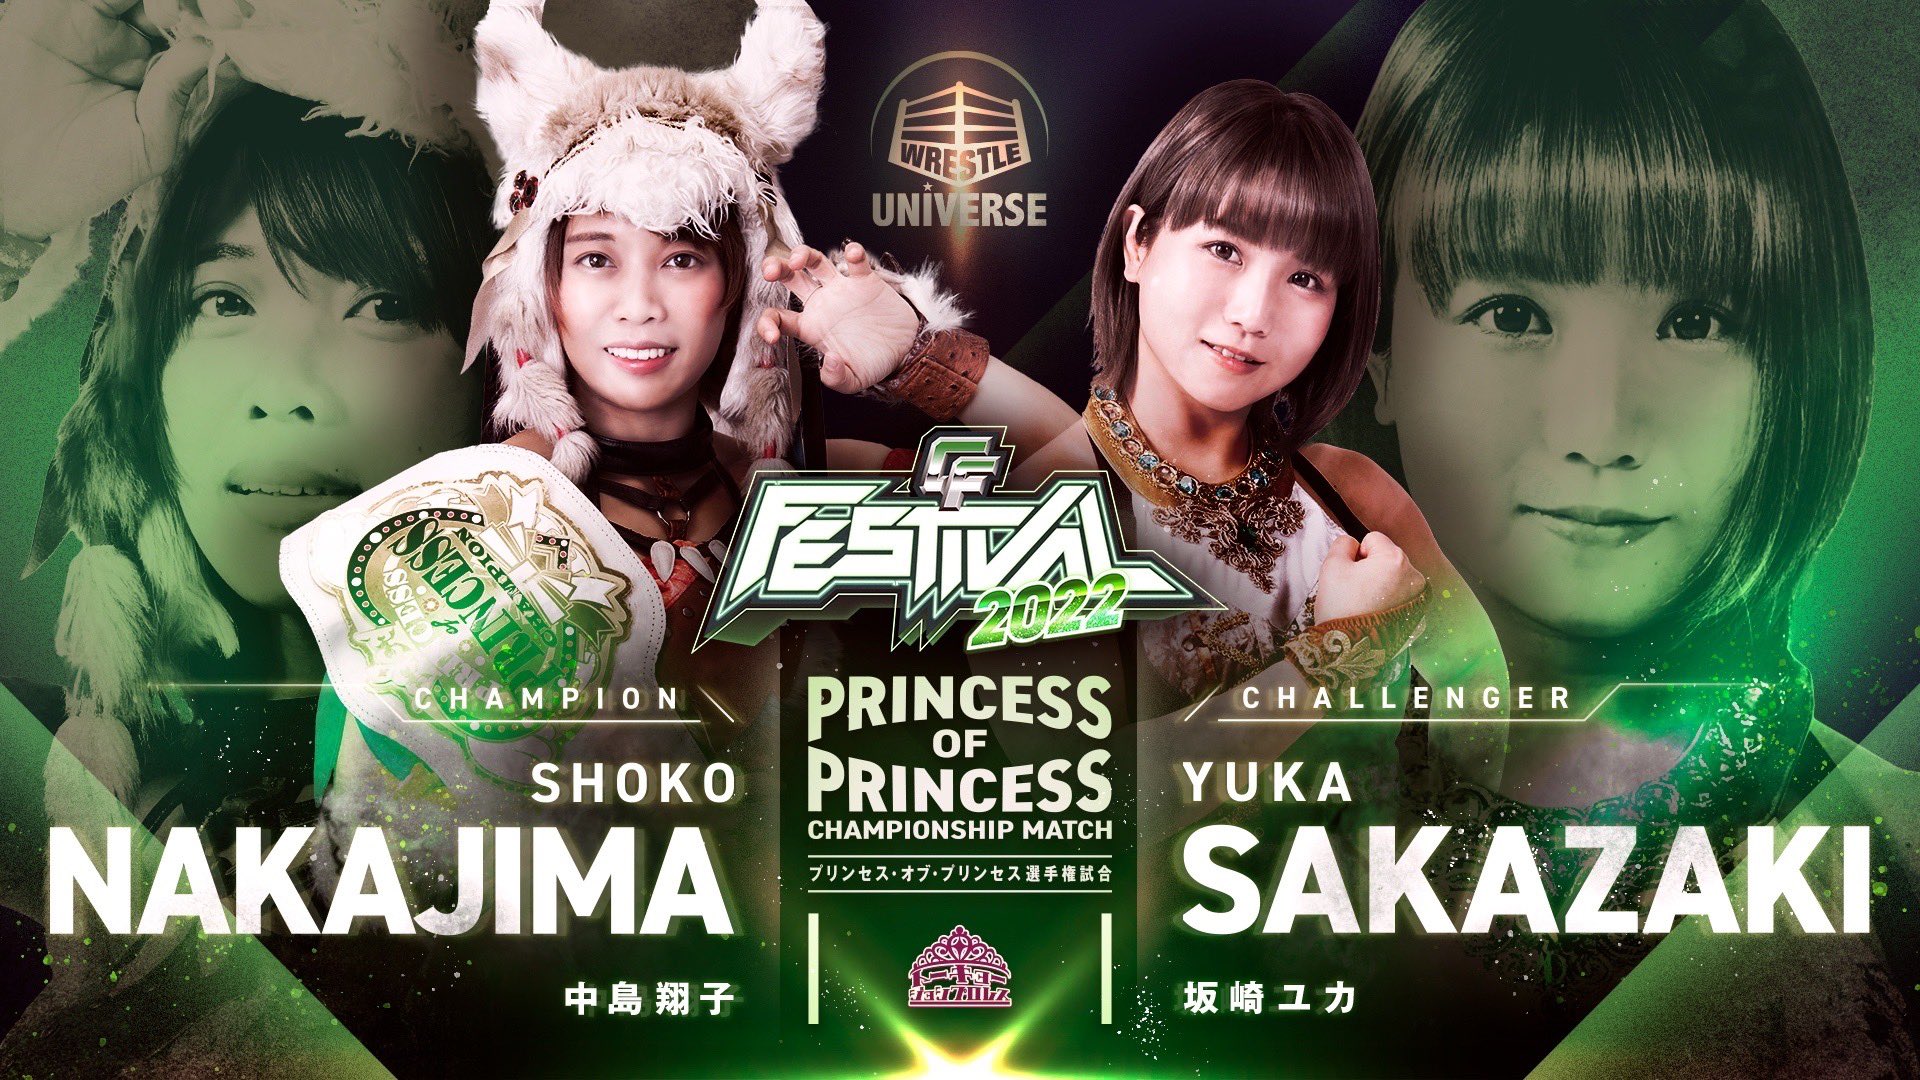 Princess Of Princess Championship Match